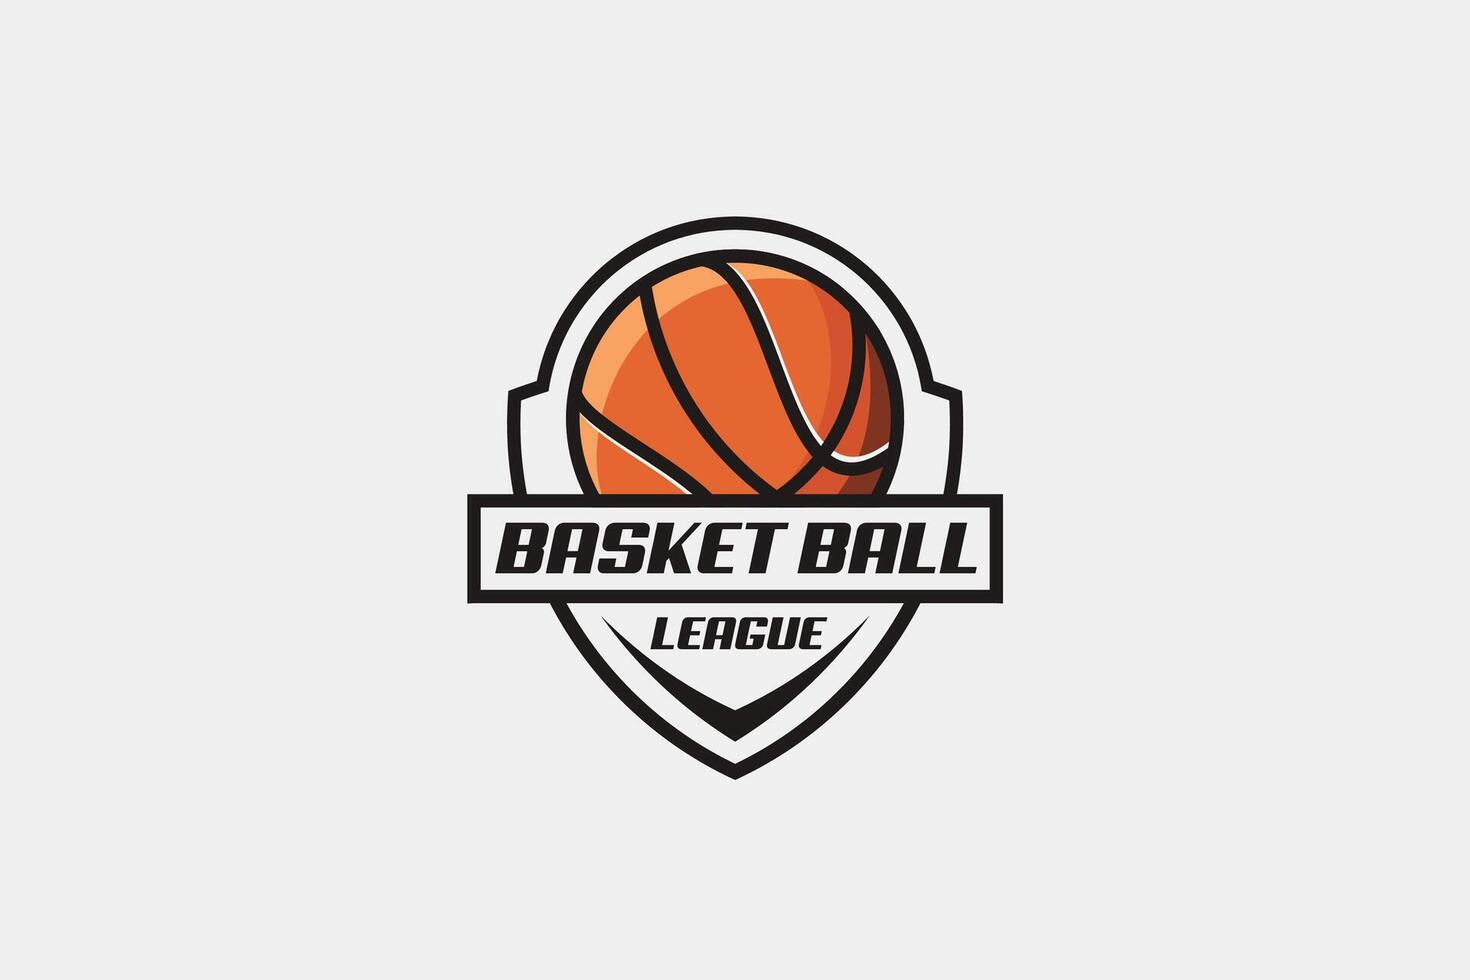 Basket ball play logo and vector